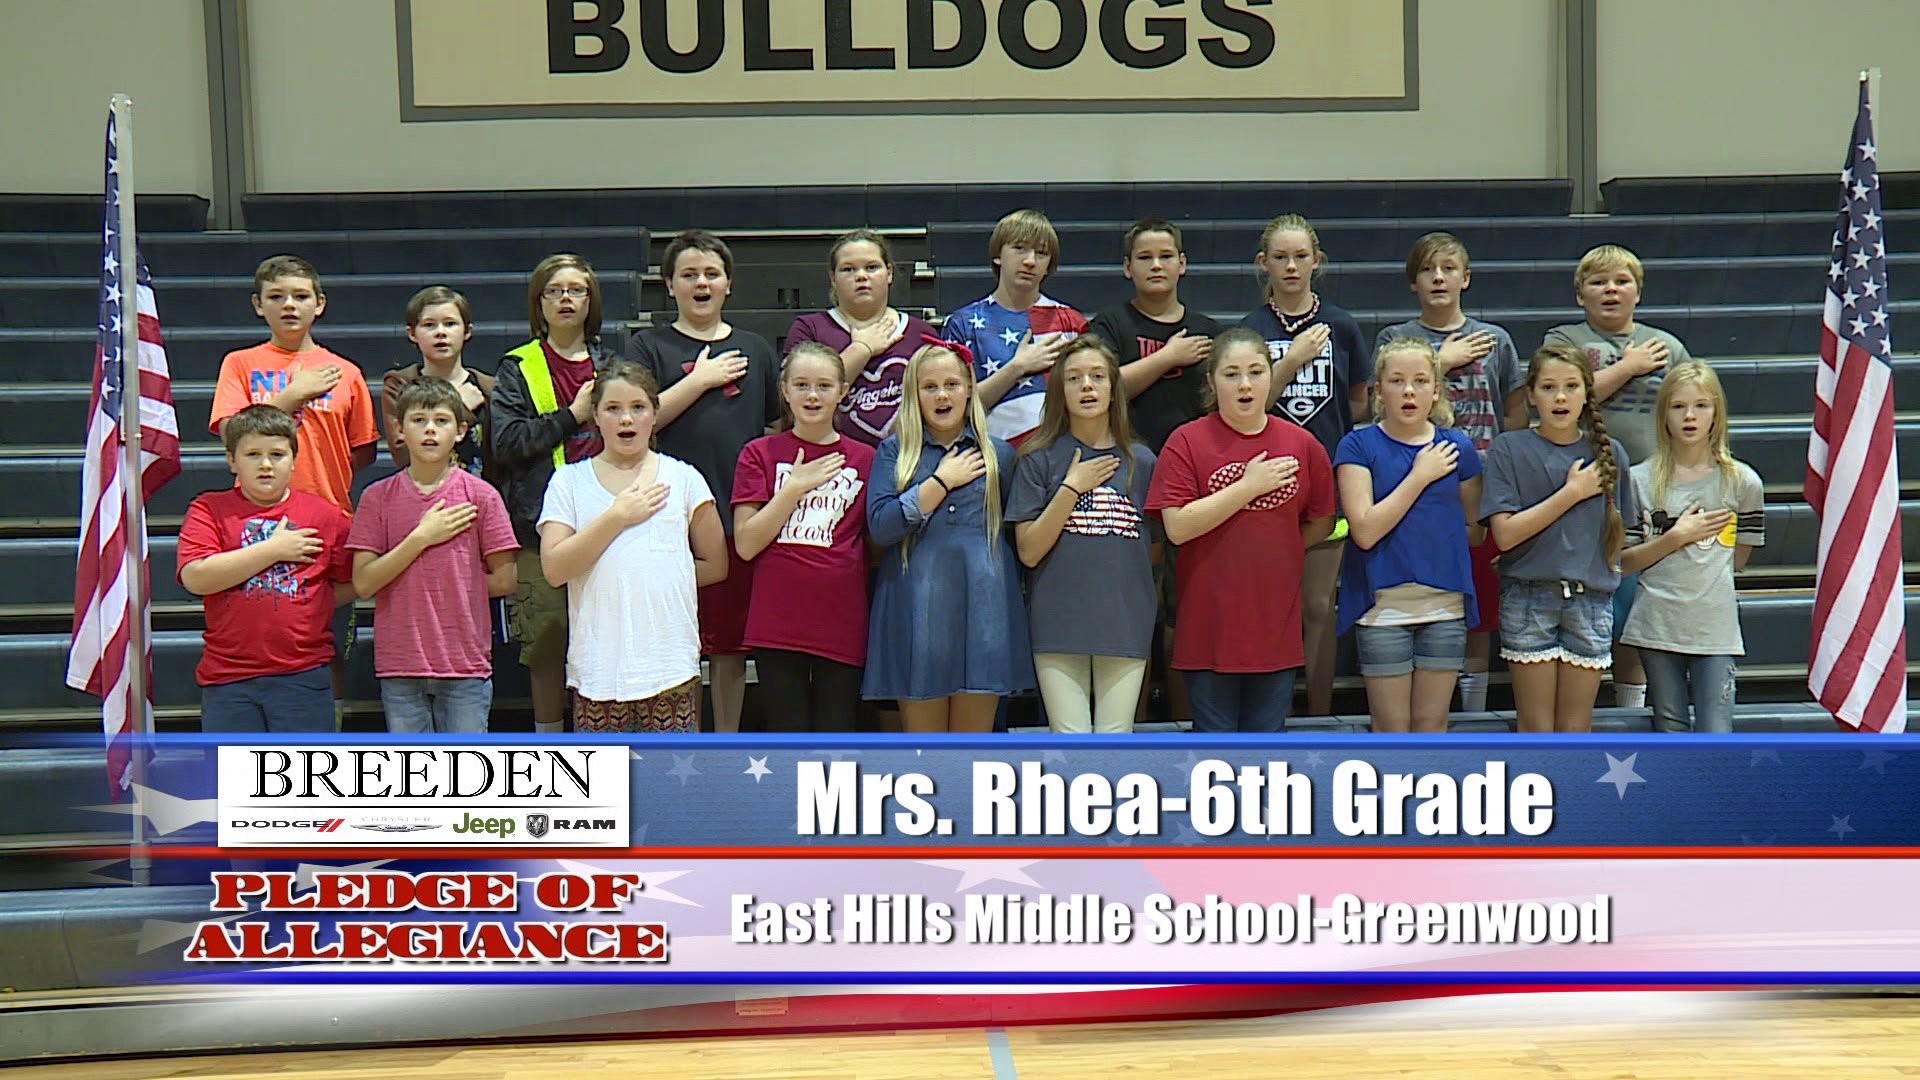 East Hills Middle School, Greenwood - Mrs. Rhea - 6th Grade